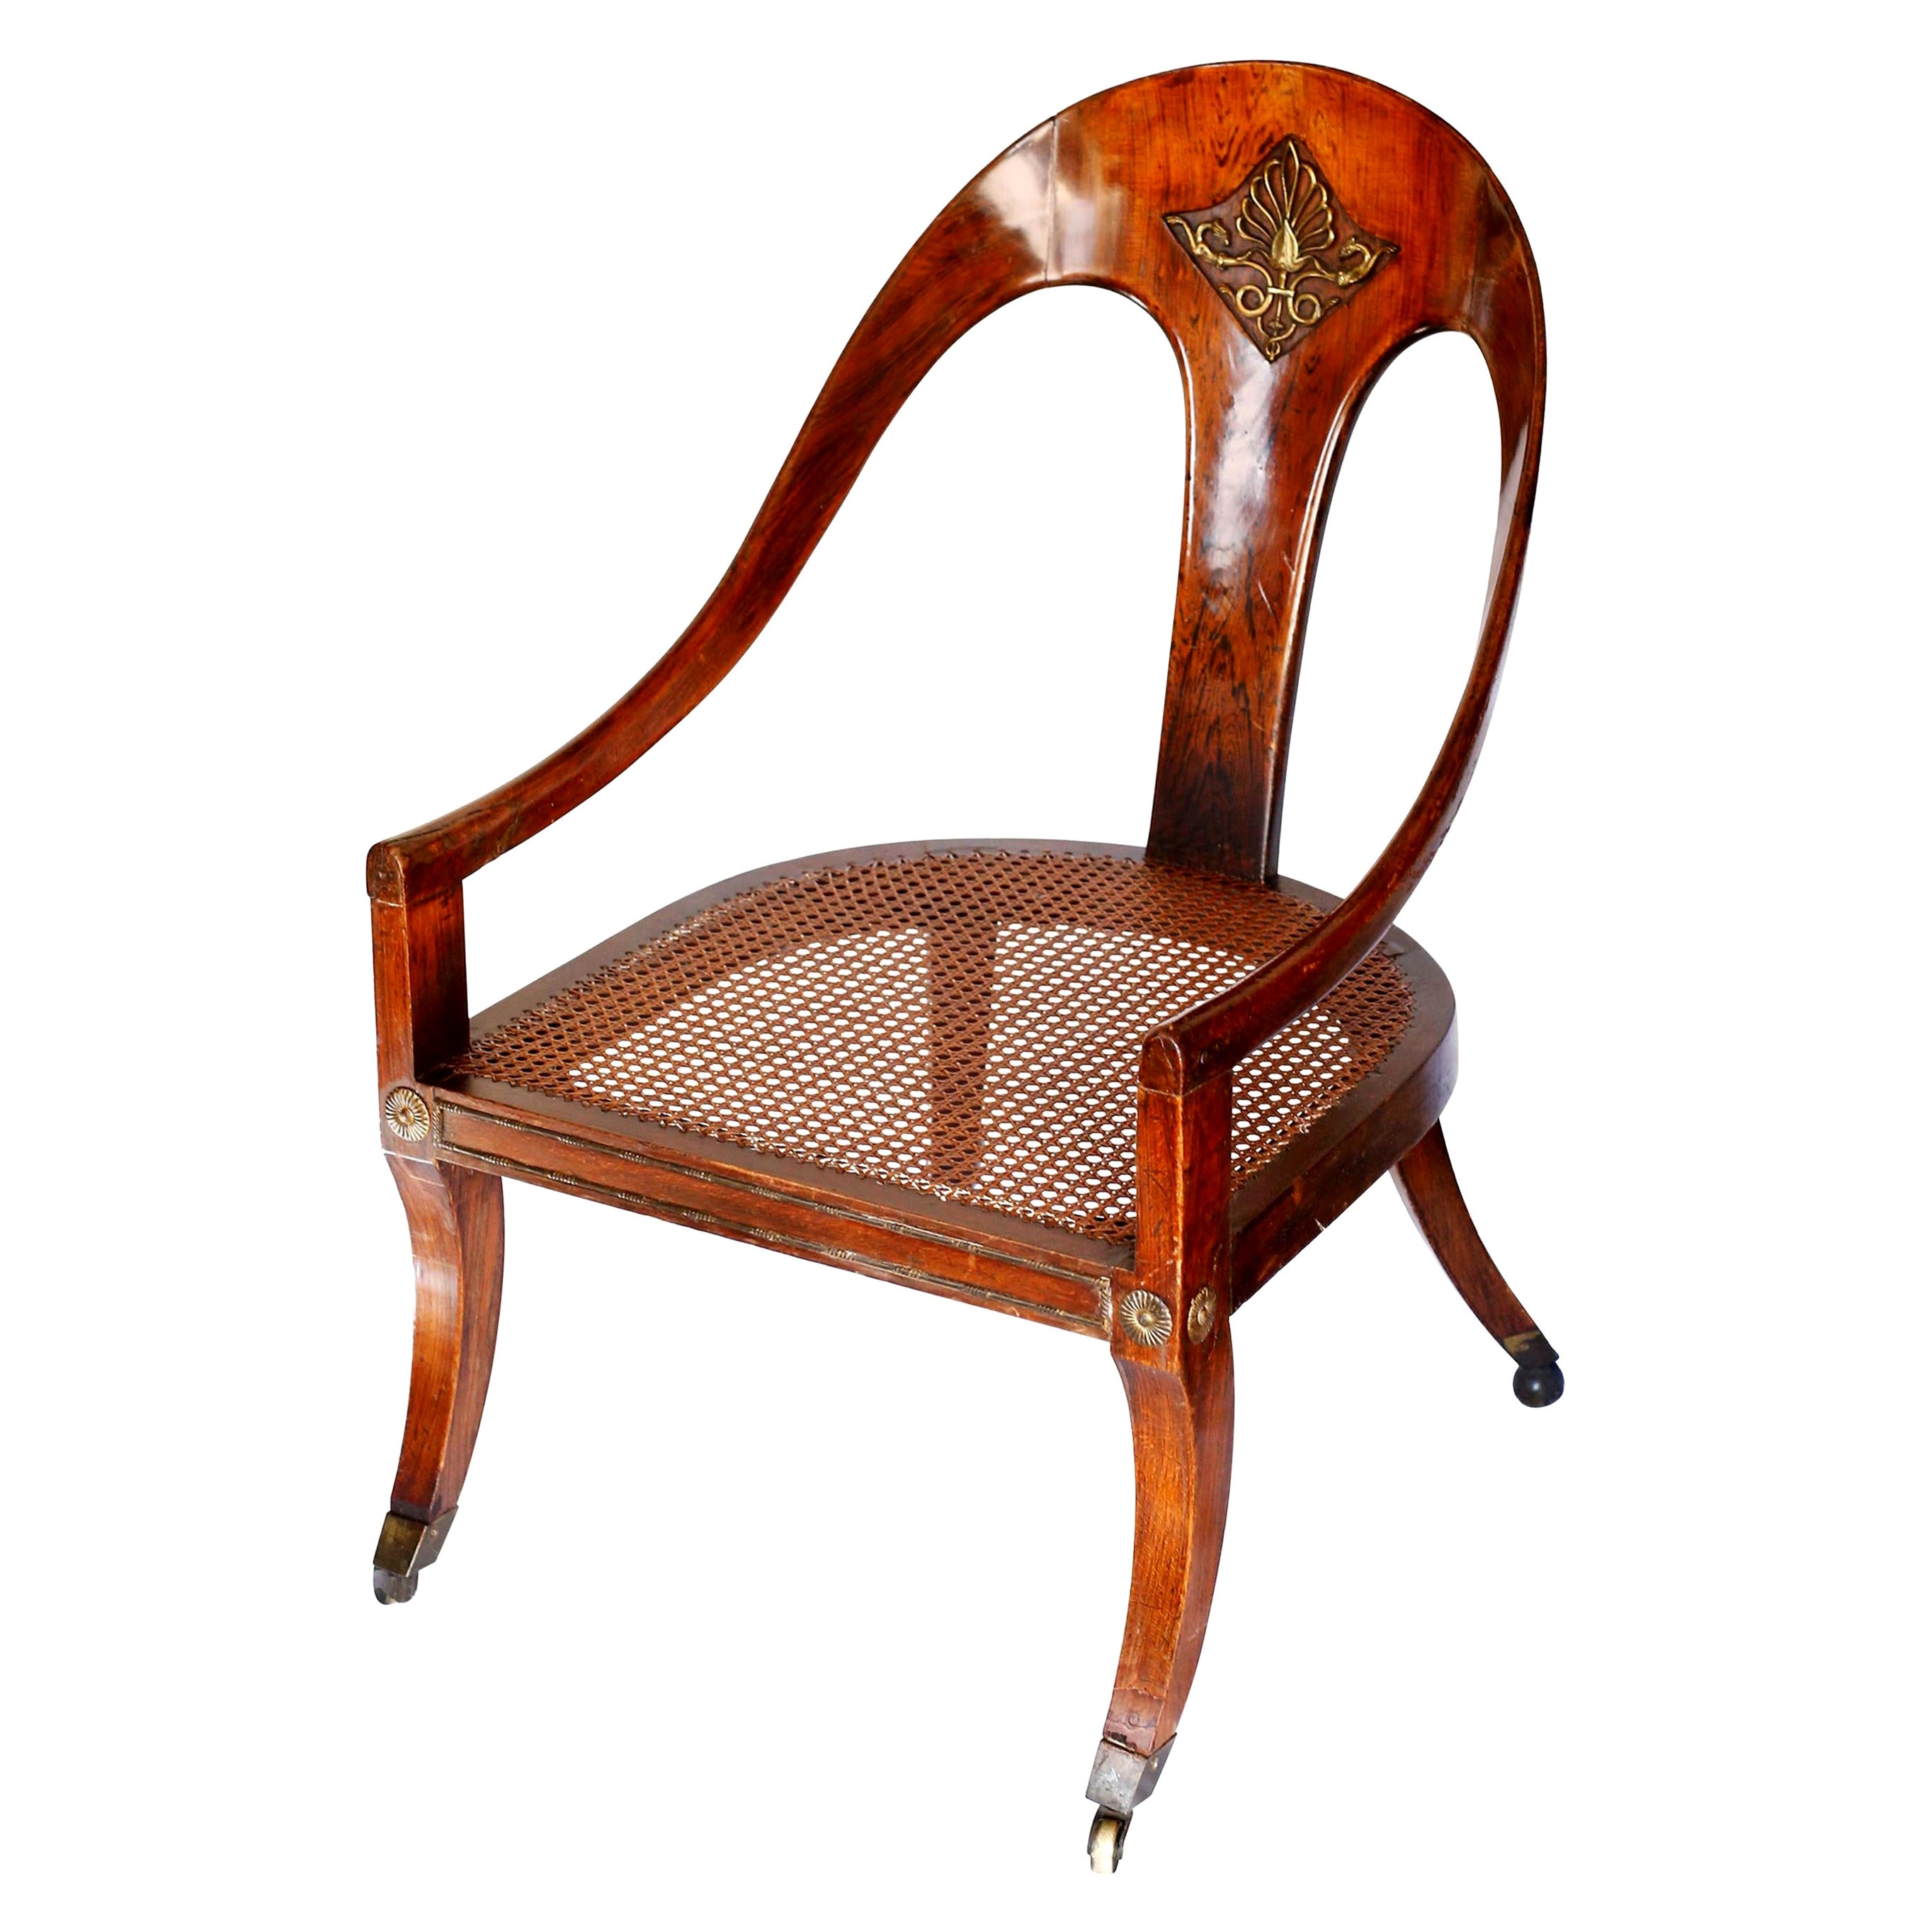 Early 19th Century Regency Faux Rosewood Roman Spoon Chair